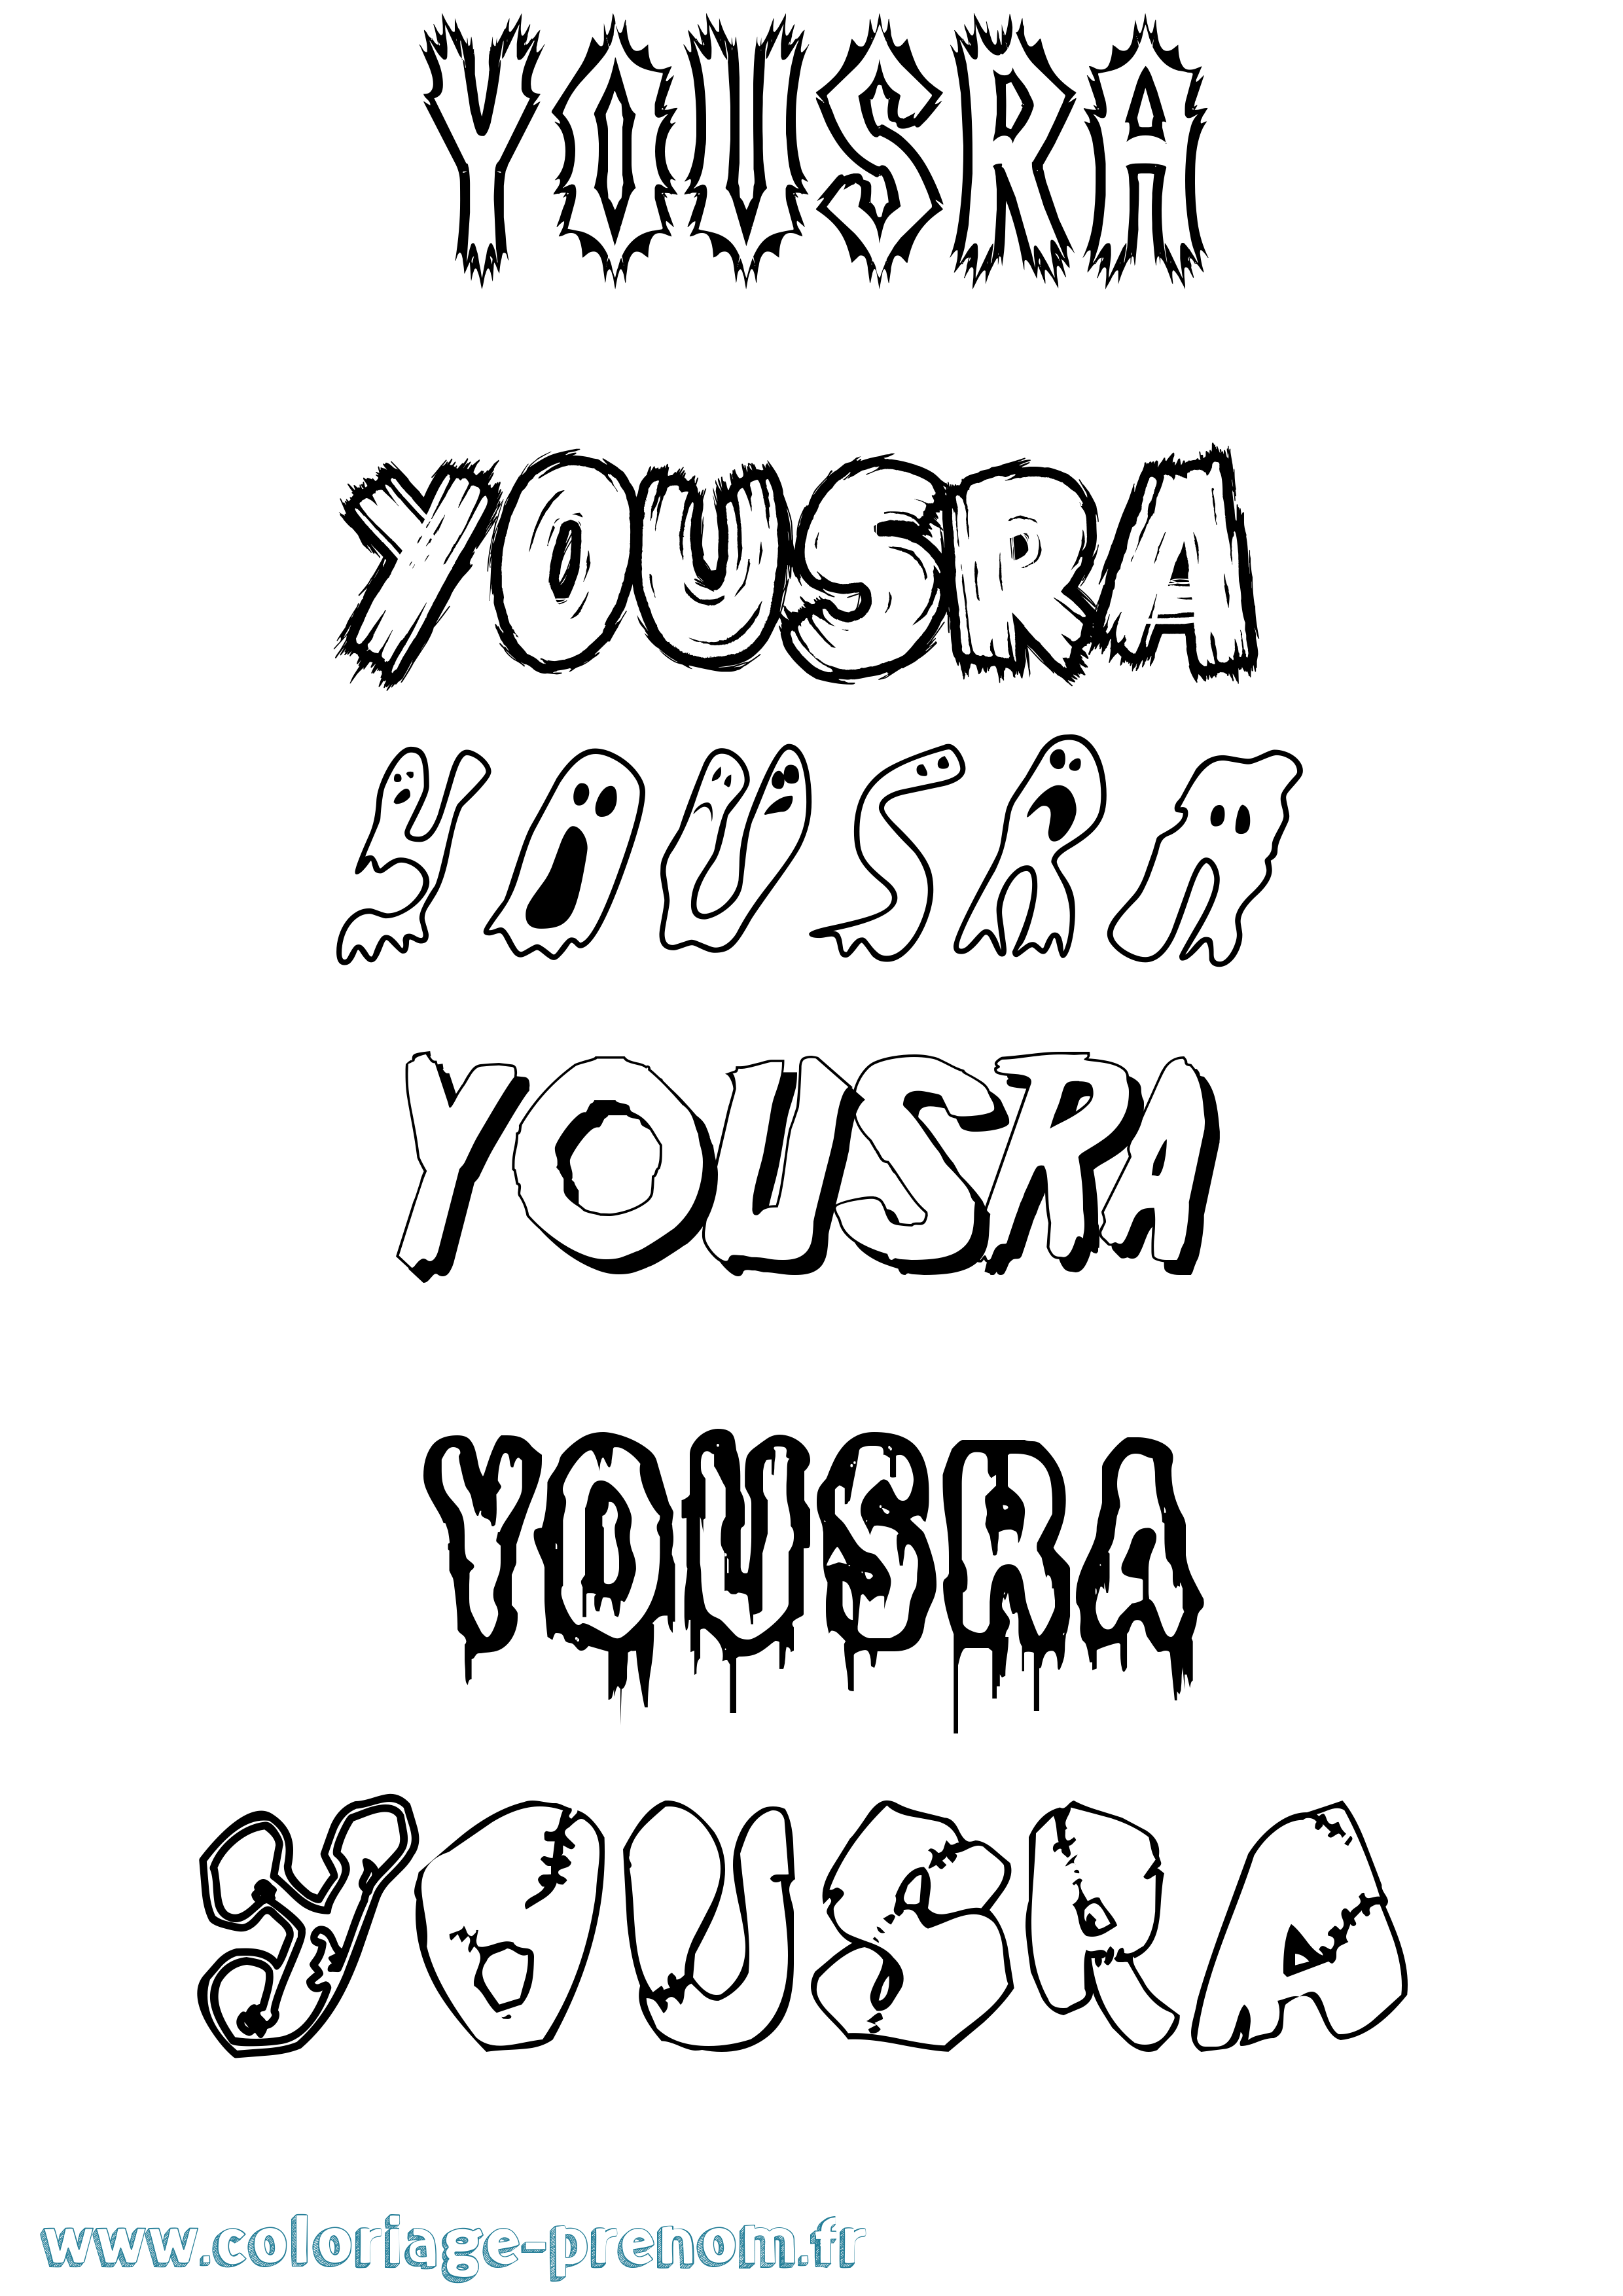 Coloriage prénom Yousra